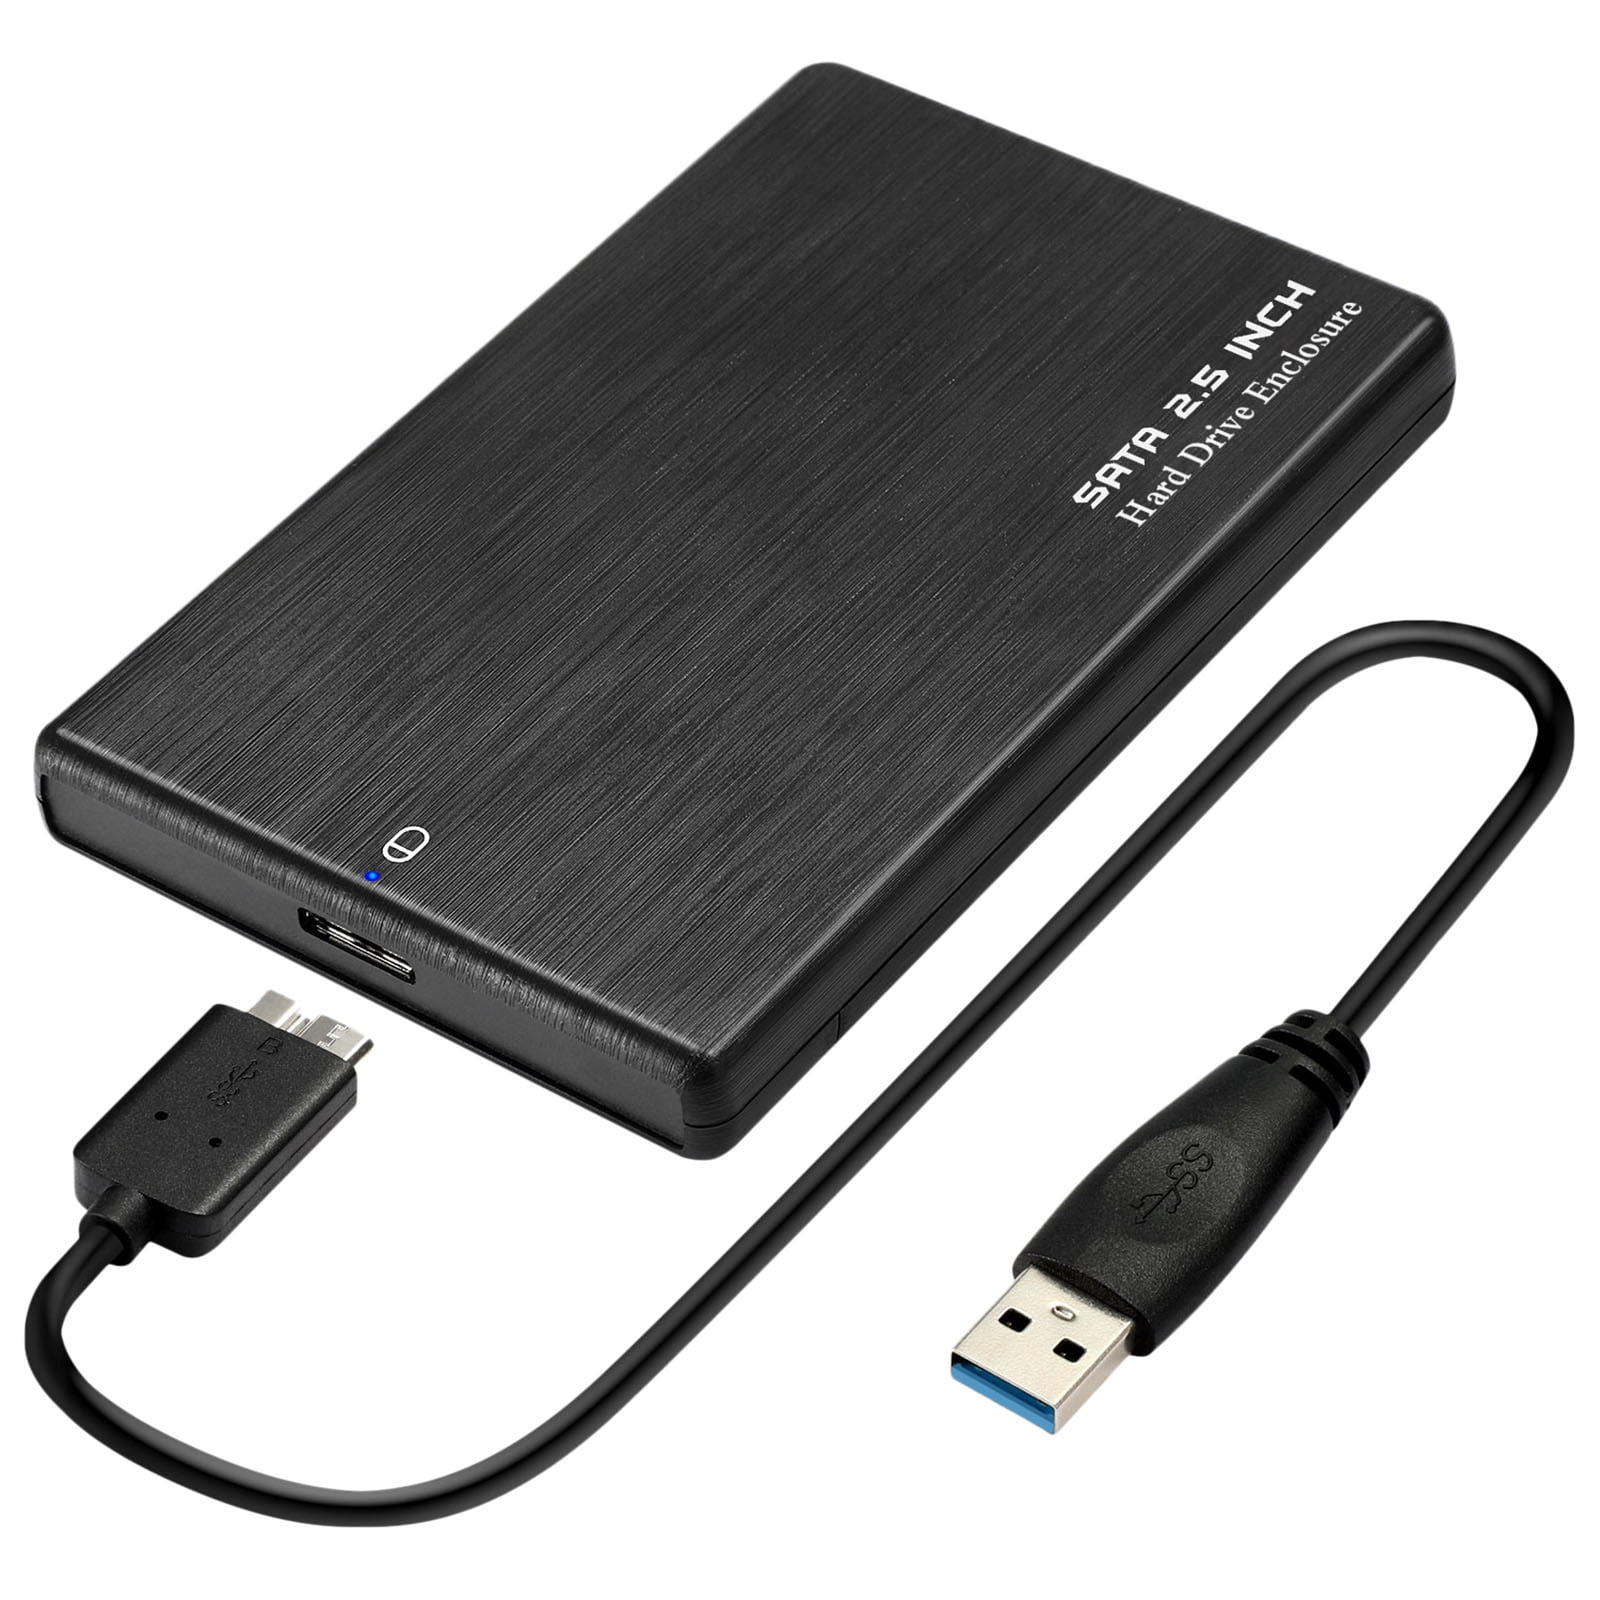 SHELLTON 2.5'' Ultra Slim USB 3.0 Portable External Hard Drive 2